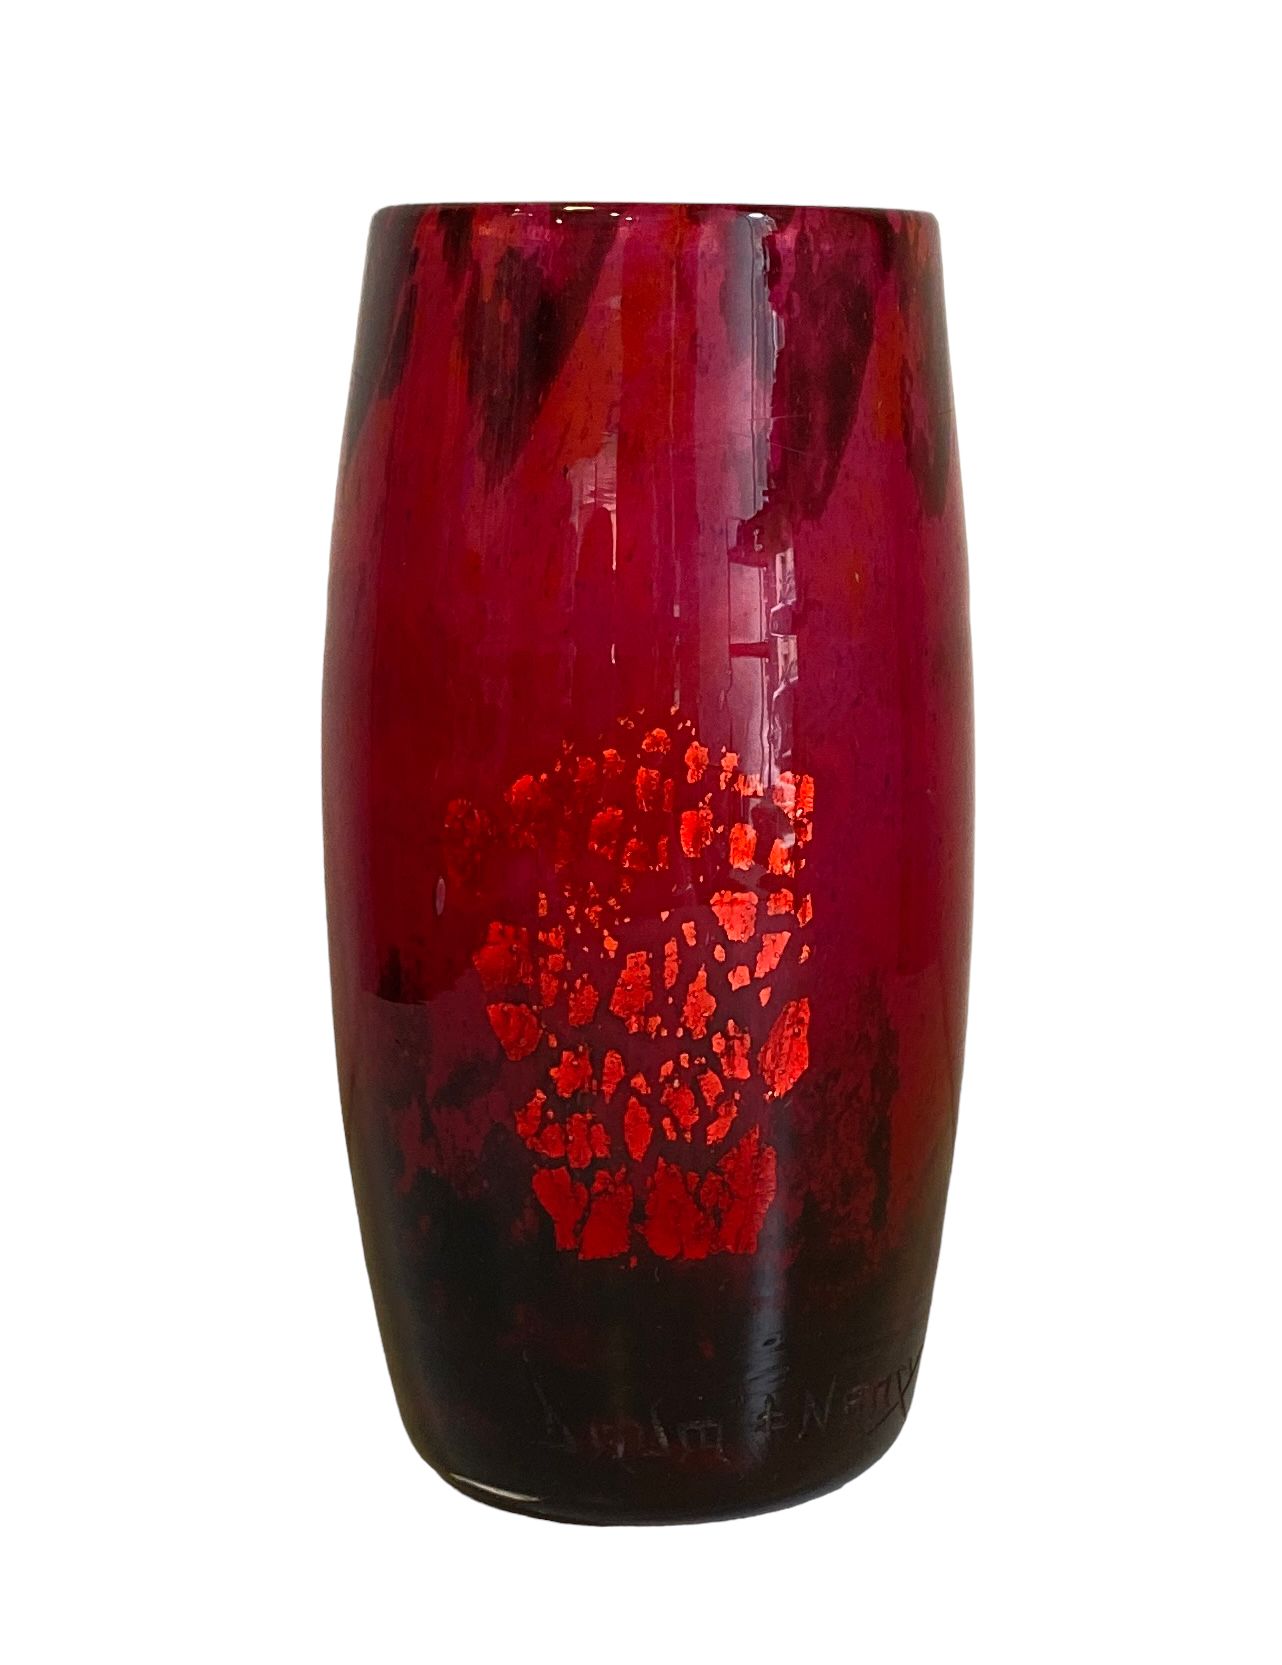 Null 道姆-南希
粉红色、红色和紫色色调的大理石花瓶，用金片强化。 
在顶端有签名。
现代作品。
高度：12厘米，直径：5.5厘米。